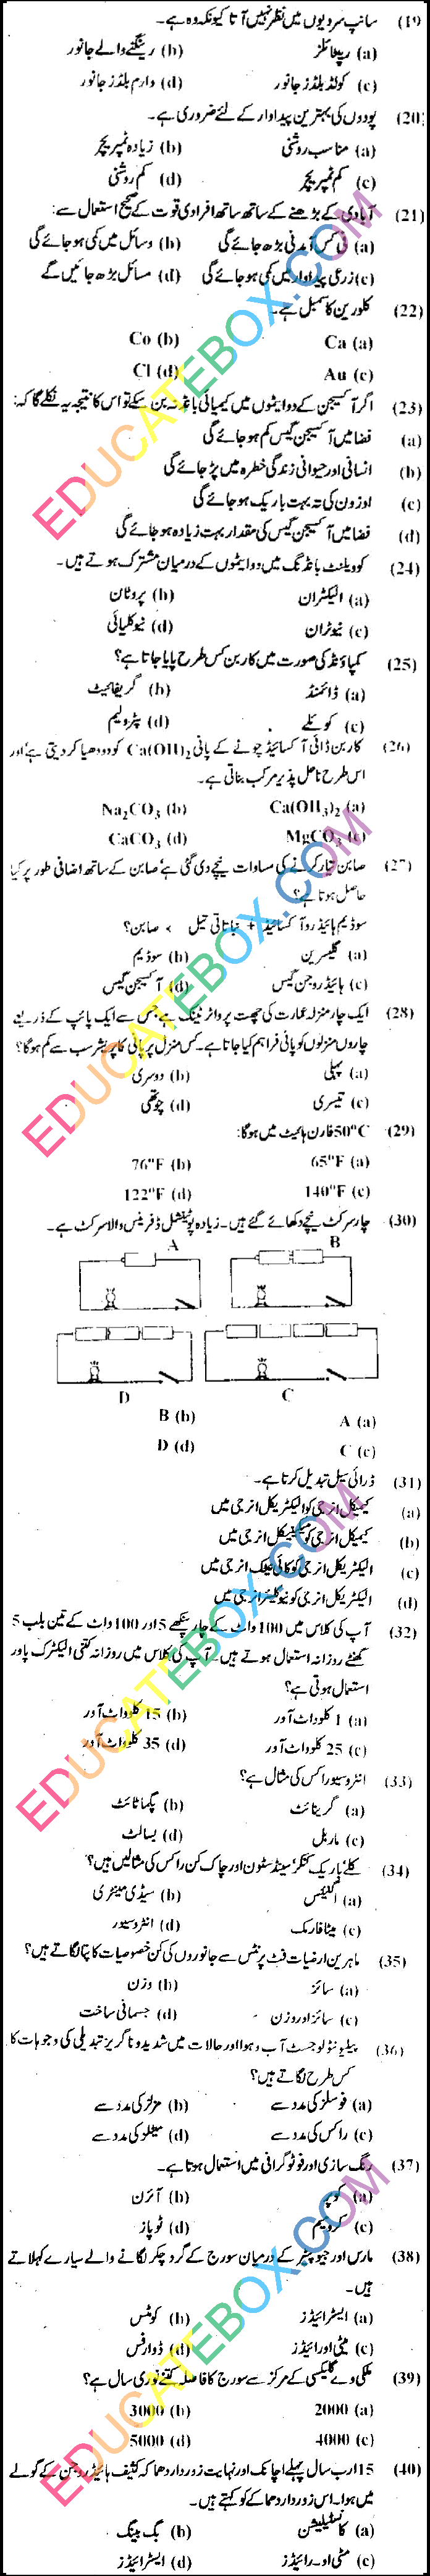 Past Paper 8th Class Science (Urdu Medium) Punjab Board (PEC) 2011 Objective Type Page 3 - پرچہ سائنس 2011 جماعت ہشتم پنجاب بورڈ اردو میڈیم